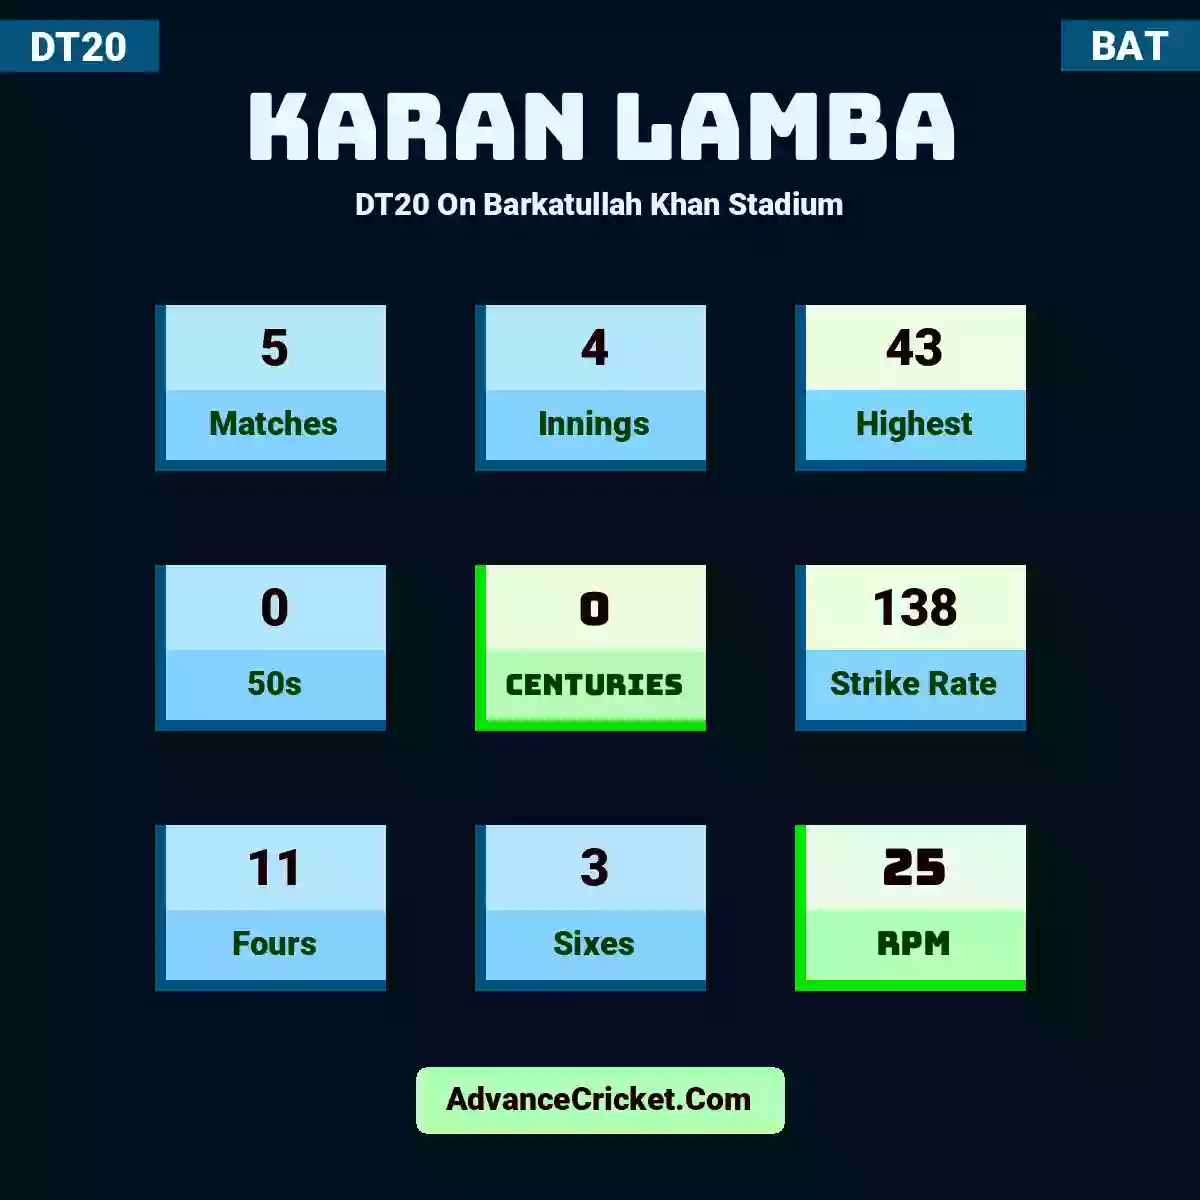 Karan Lamba DT20  On Barkatullah Khan Stadium, Karan Lamba played 5 matches, scored 43 runs as highest, 0 half-centuries, and 0 centuries, with a strike rate of 138. K.Lamba hit 11 fours and 3 sixes, with an RPM of 25.